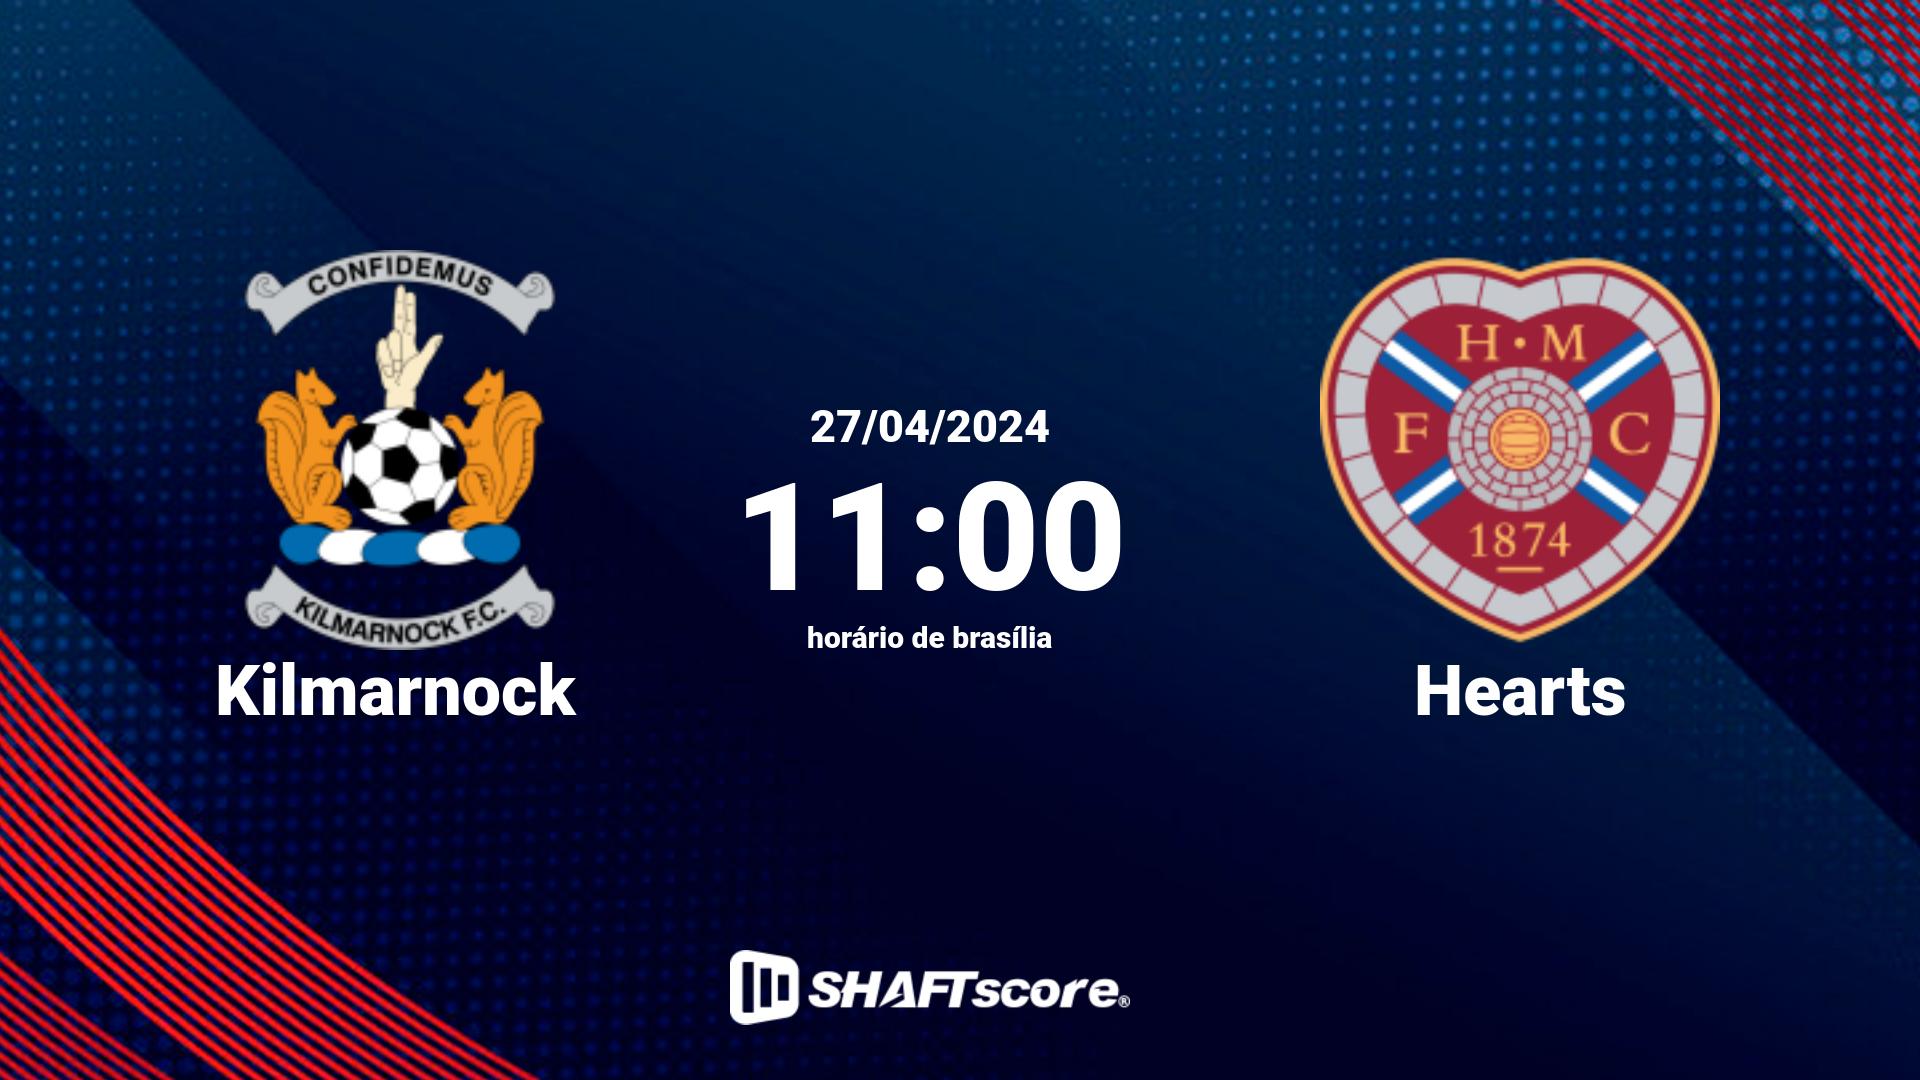 Estatísticas do jogo Kilmarnock vs Hearts 27.04 11:00